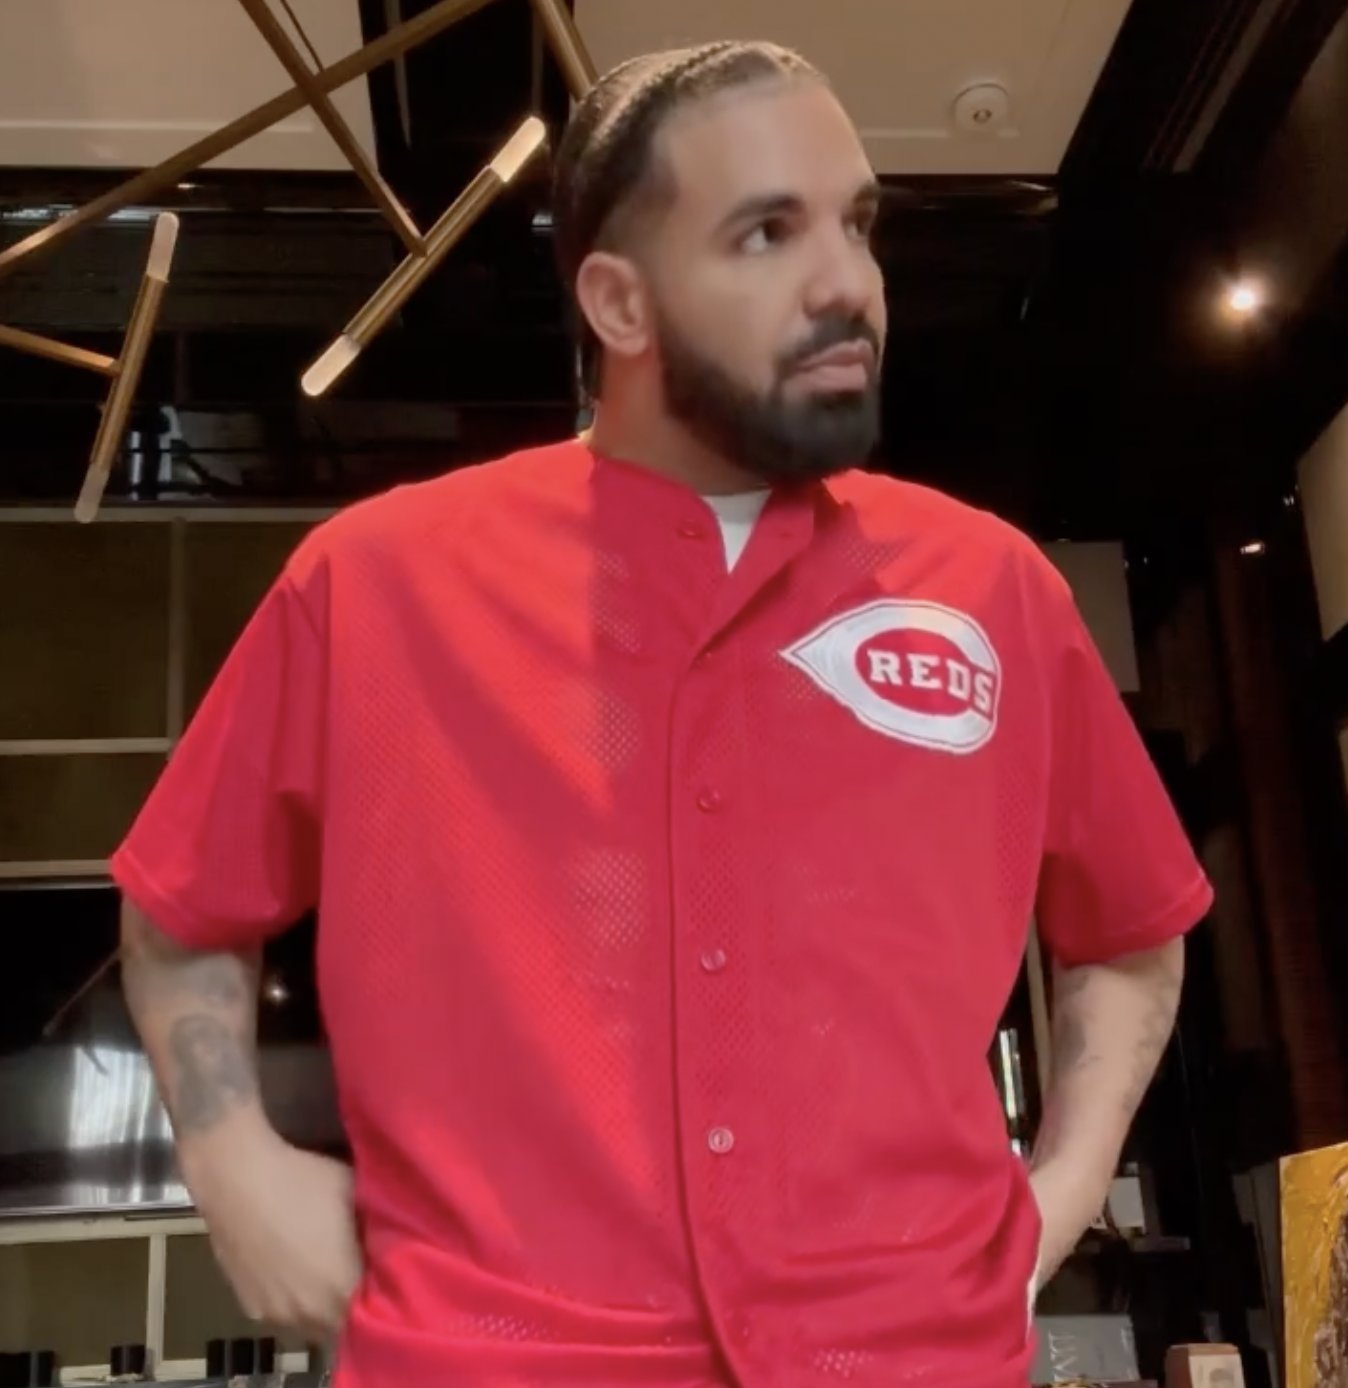 MLB Life on X: Drake wearing a Cincinnati @Reds jersey 👀 https